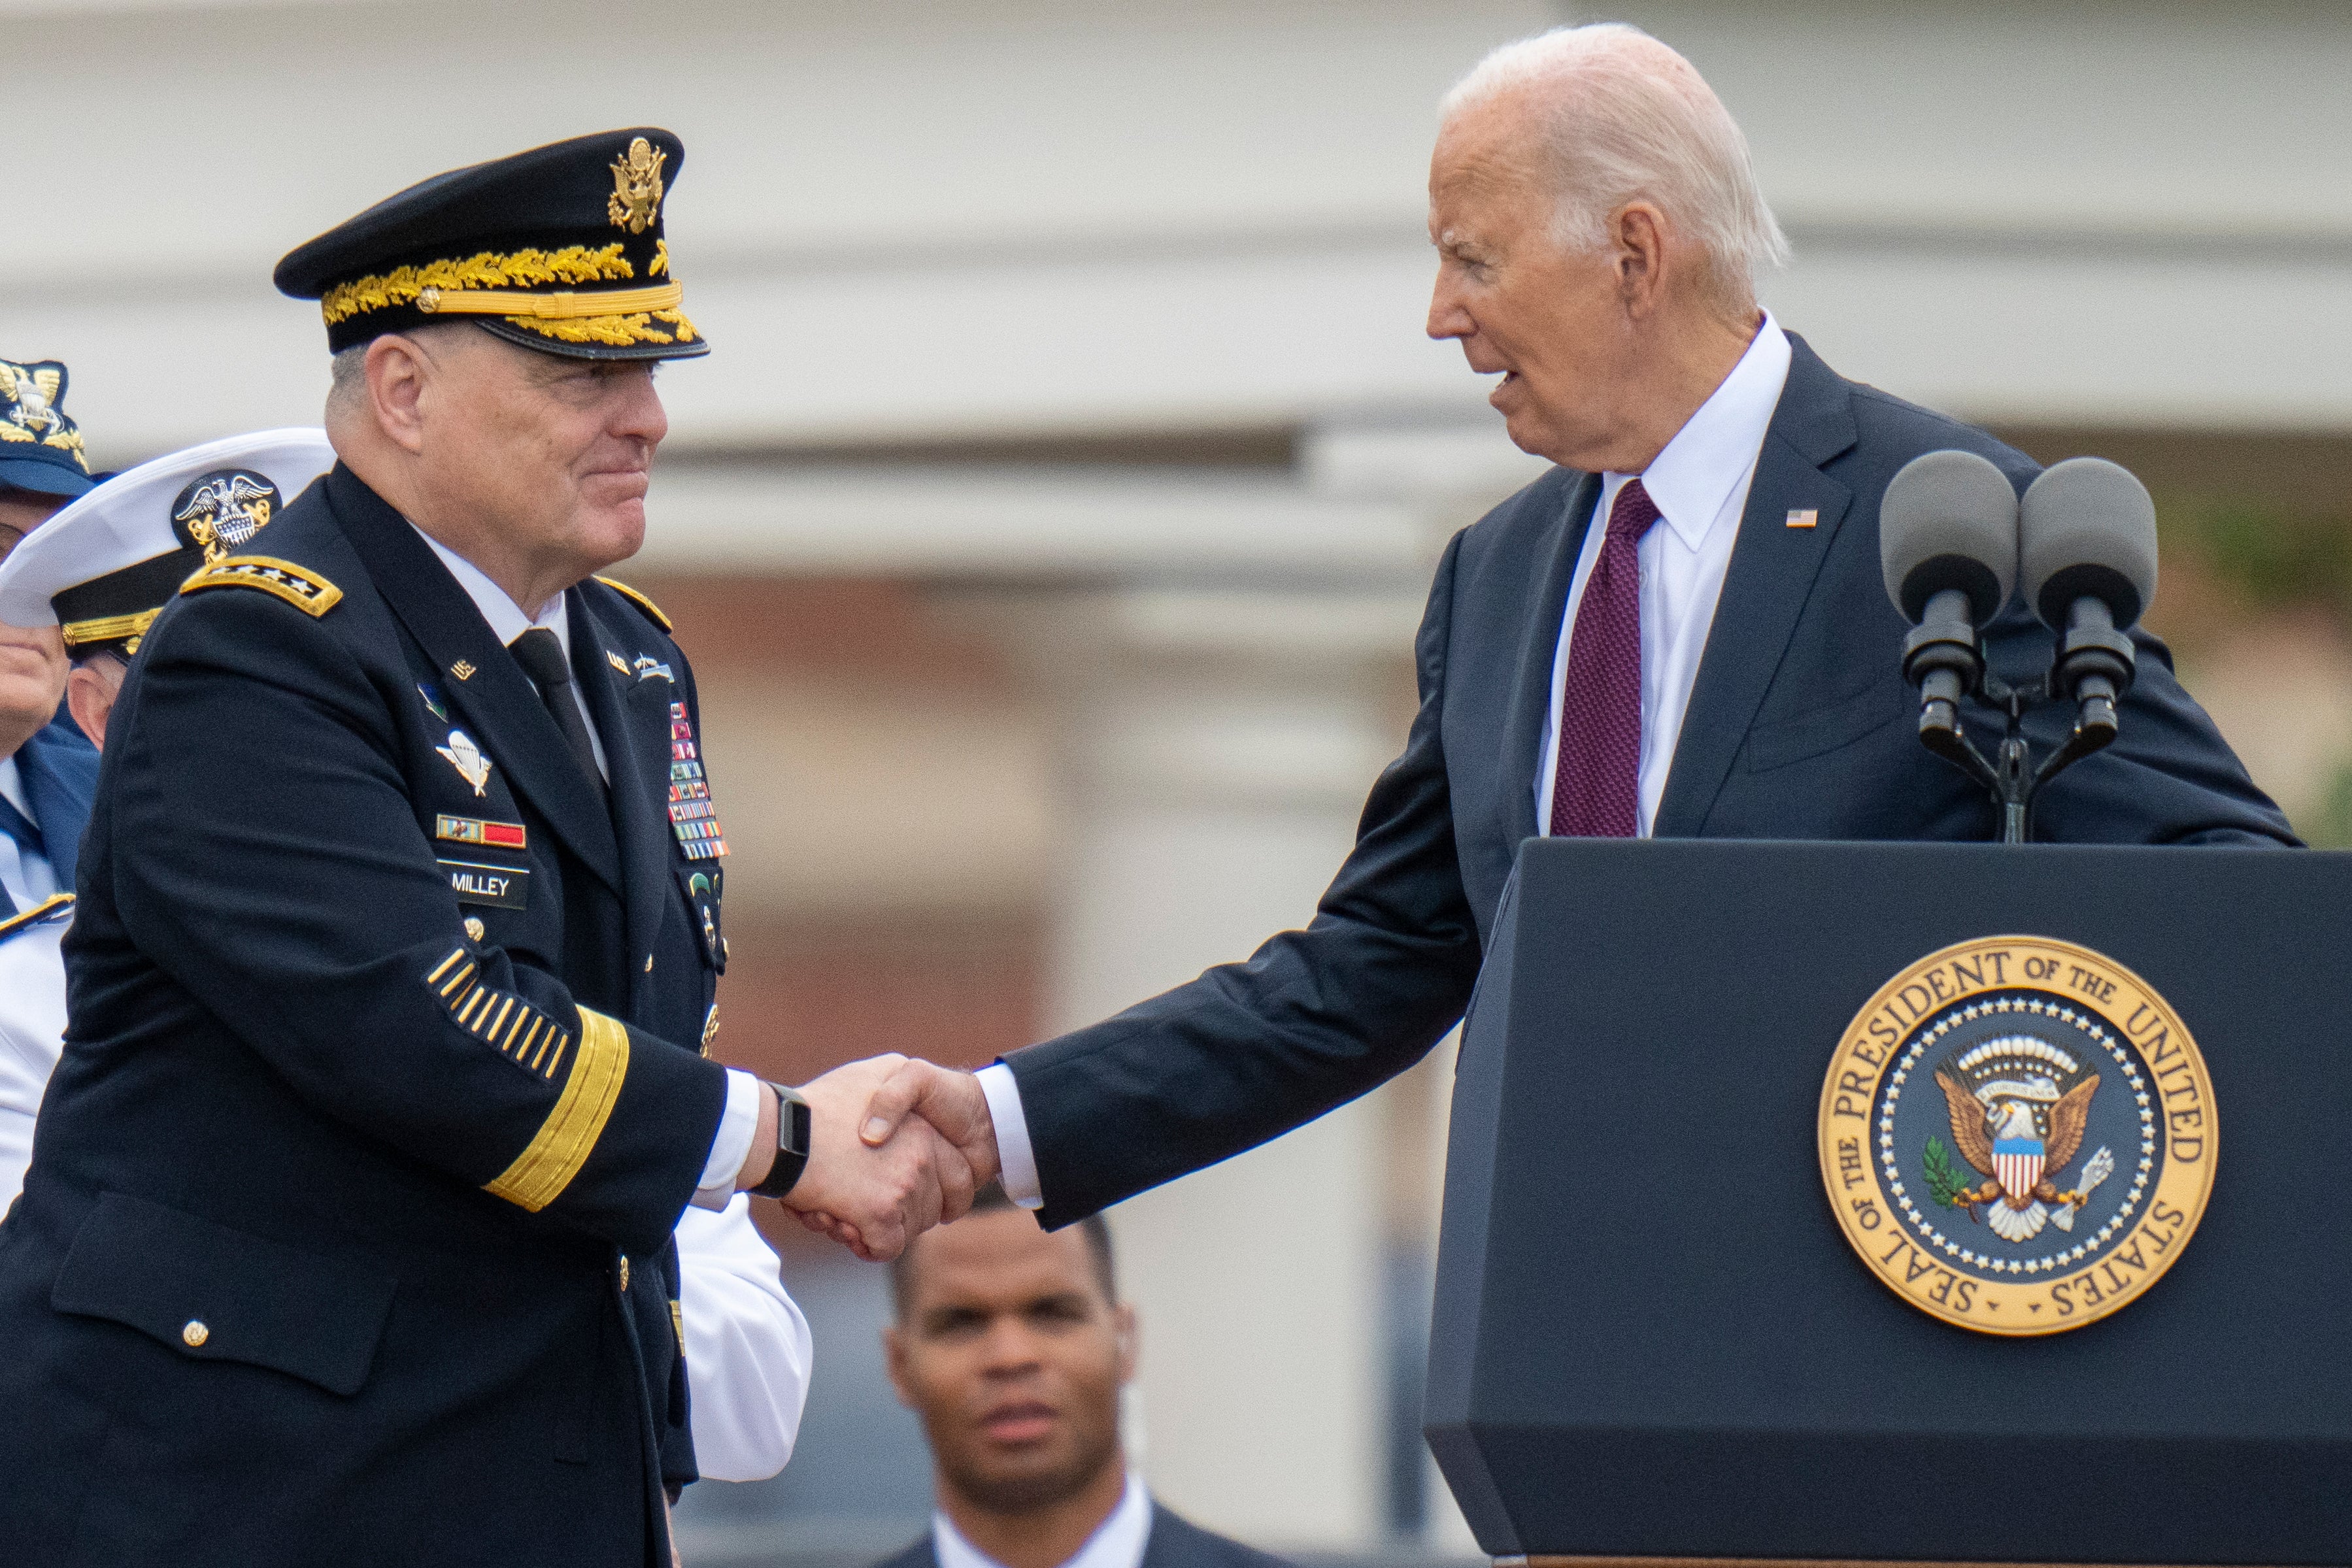 President Joe Biden was present at Mr Milley’s retirement ceremony on Friday